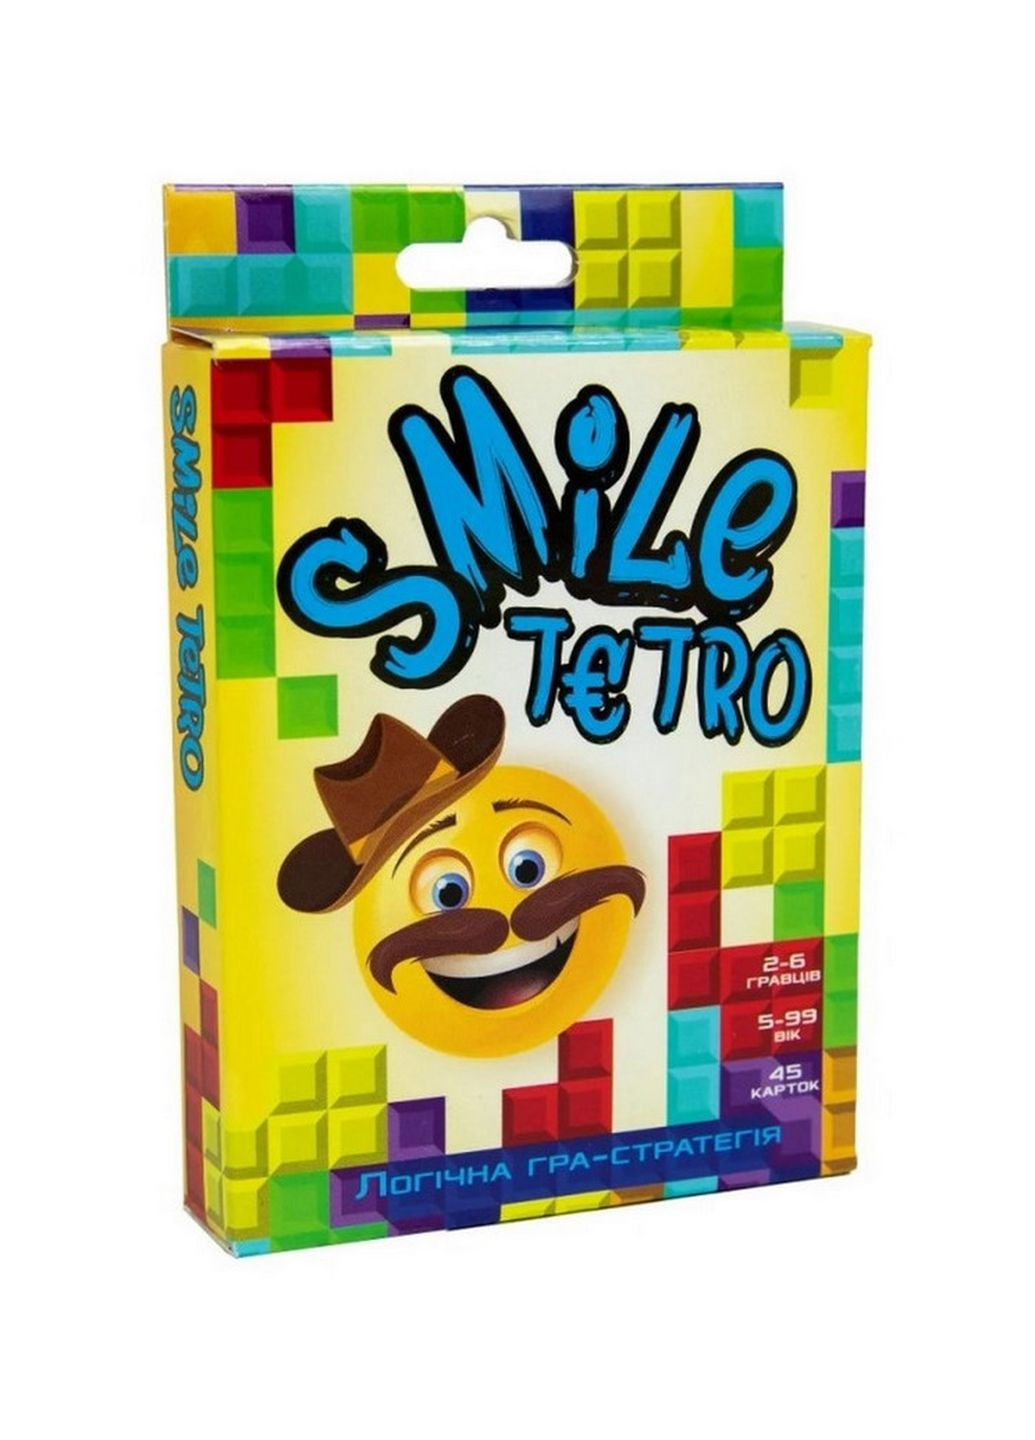 Настольная игра "Smile tetro" 30280 на украинском языке Strateg (262085310)